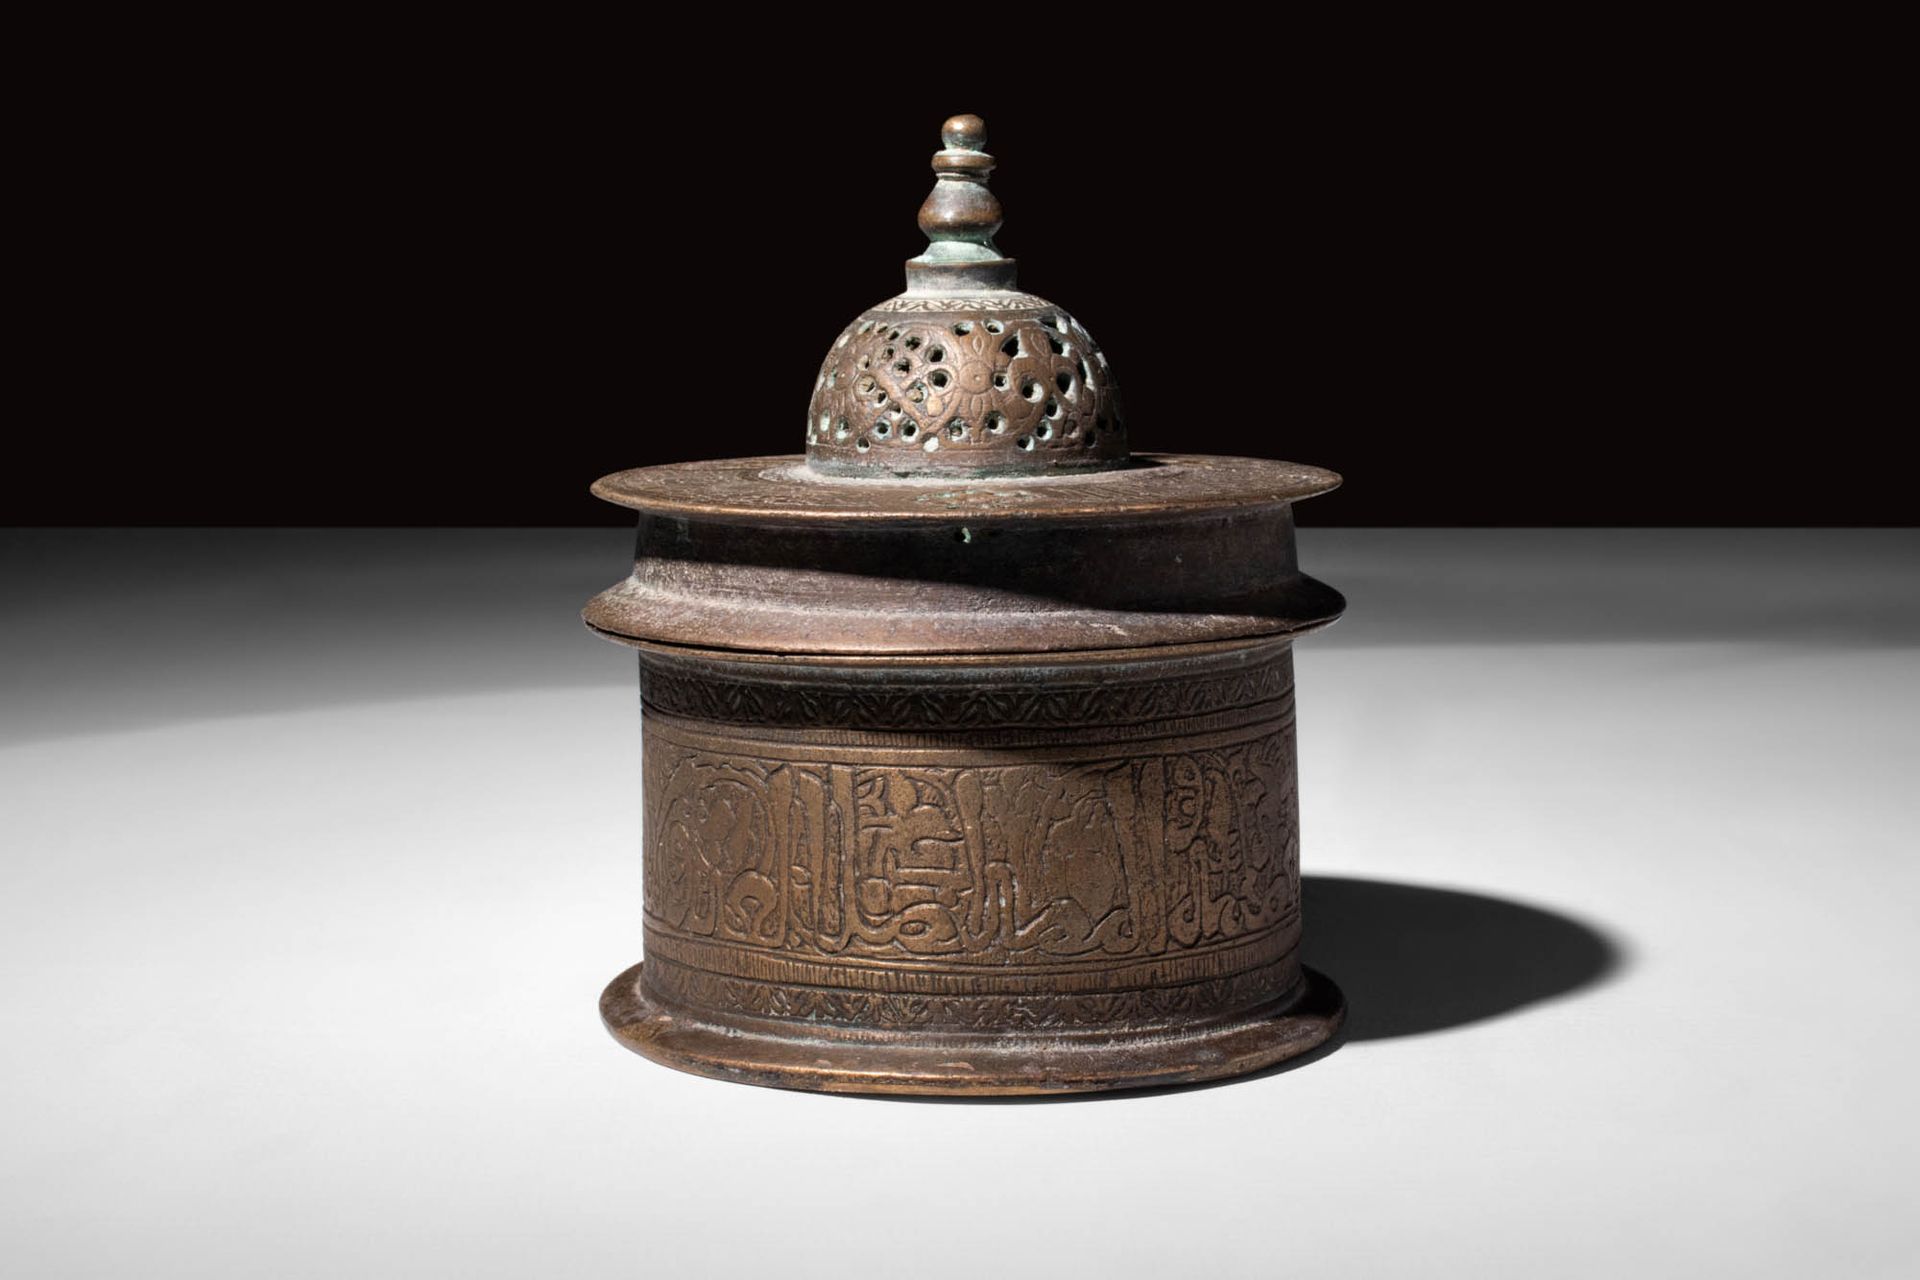 MEDIEVAL SELJUK BRONZE DECORATED INKWELL Ca.约 1100-1300 年。
这是一个中世纪塞尔柱青铜墨水瓶，圆柱形的瓶&hellip;